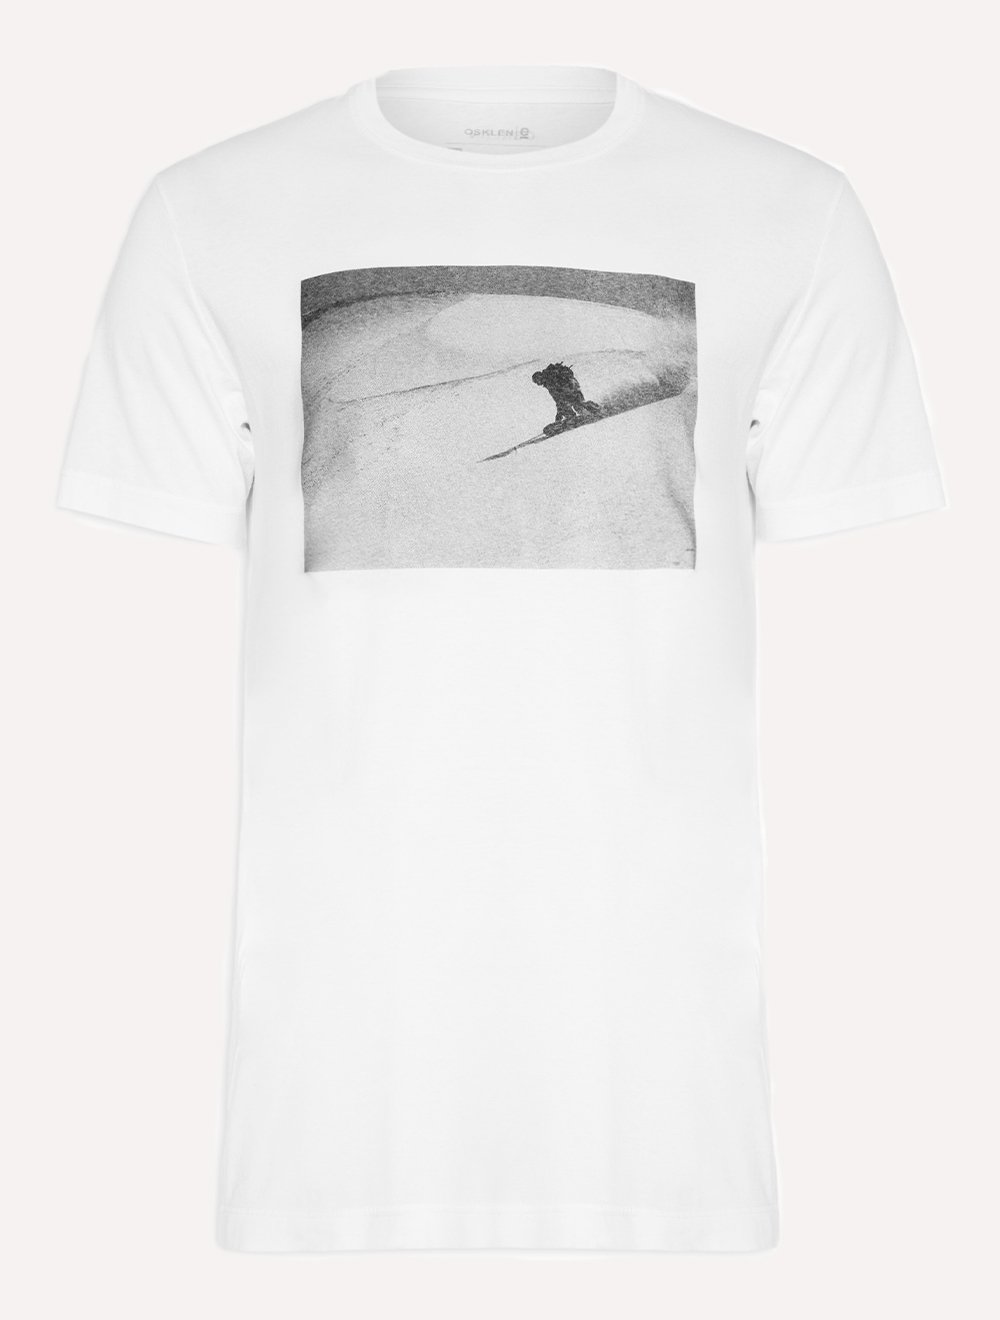 Camiseta Osklen Masculina Slim Stone DNA Photo 02 Branca